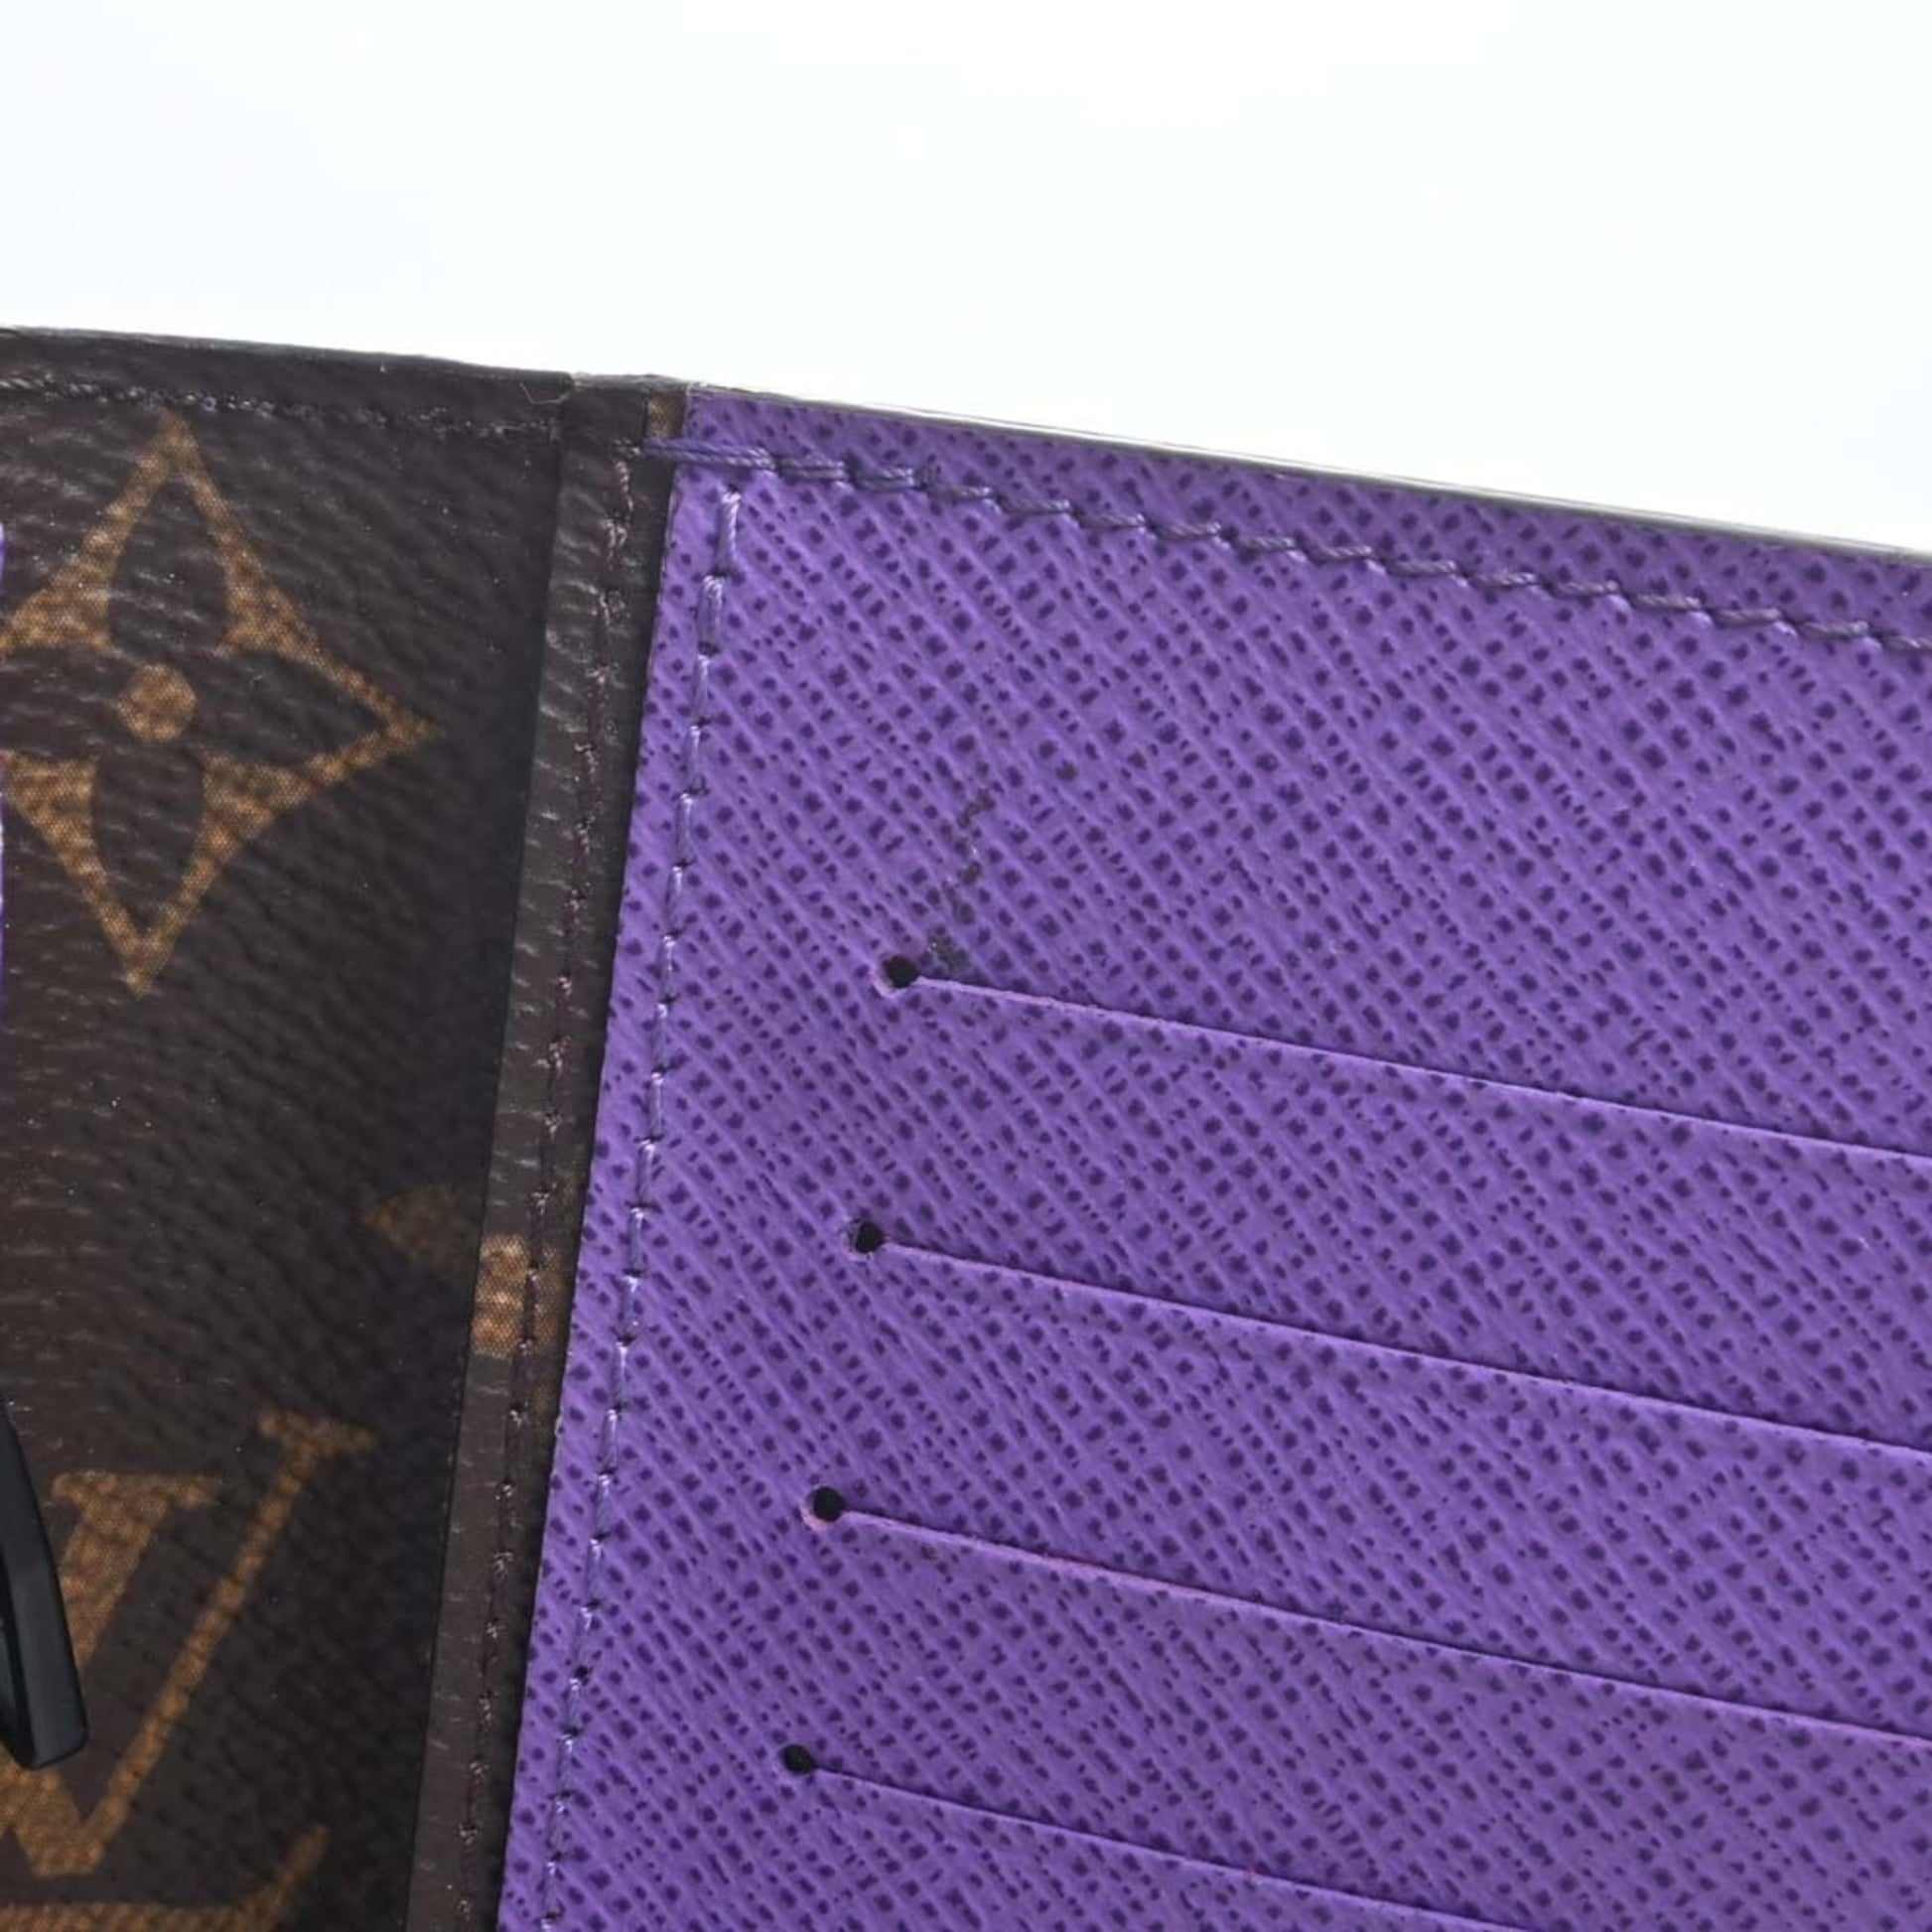 Shop Louis Vuitton Brazza Wallet (PORTEFEUILLE BRAZZA, M30297) by